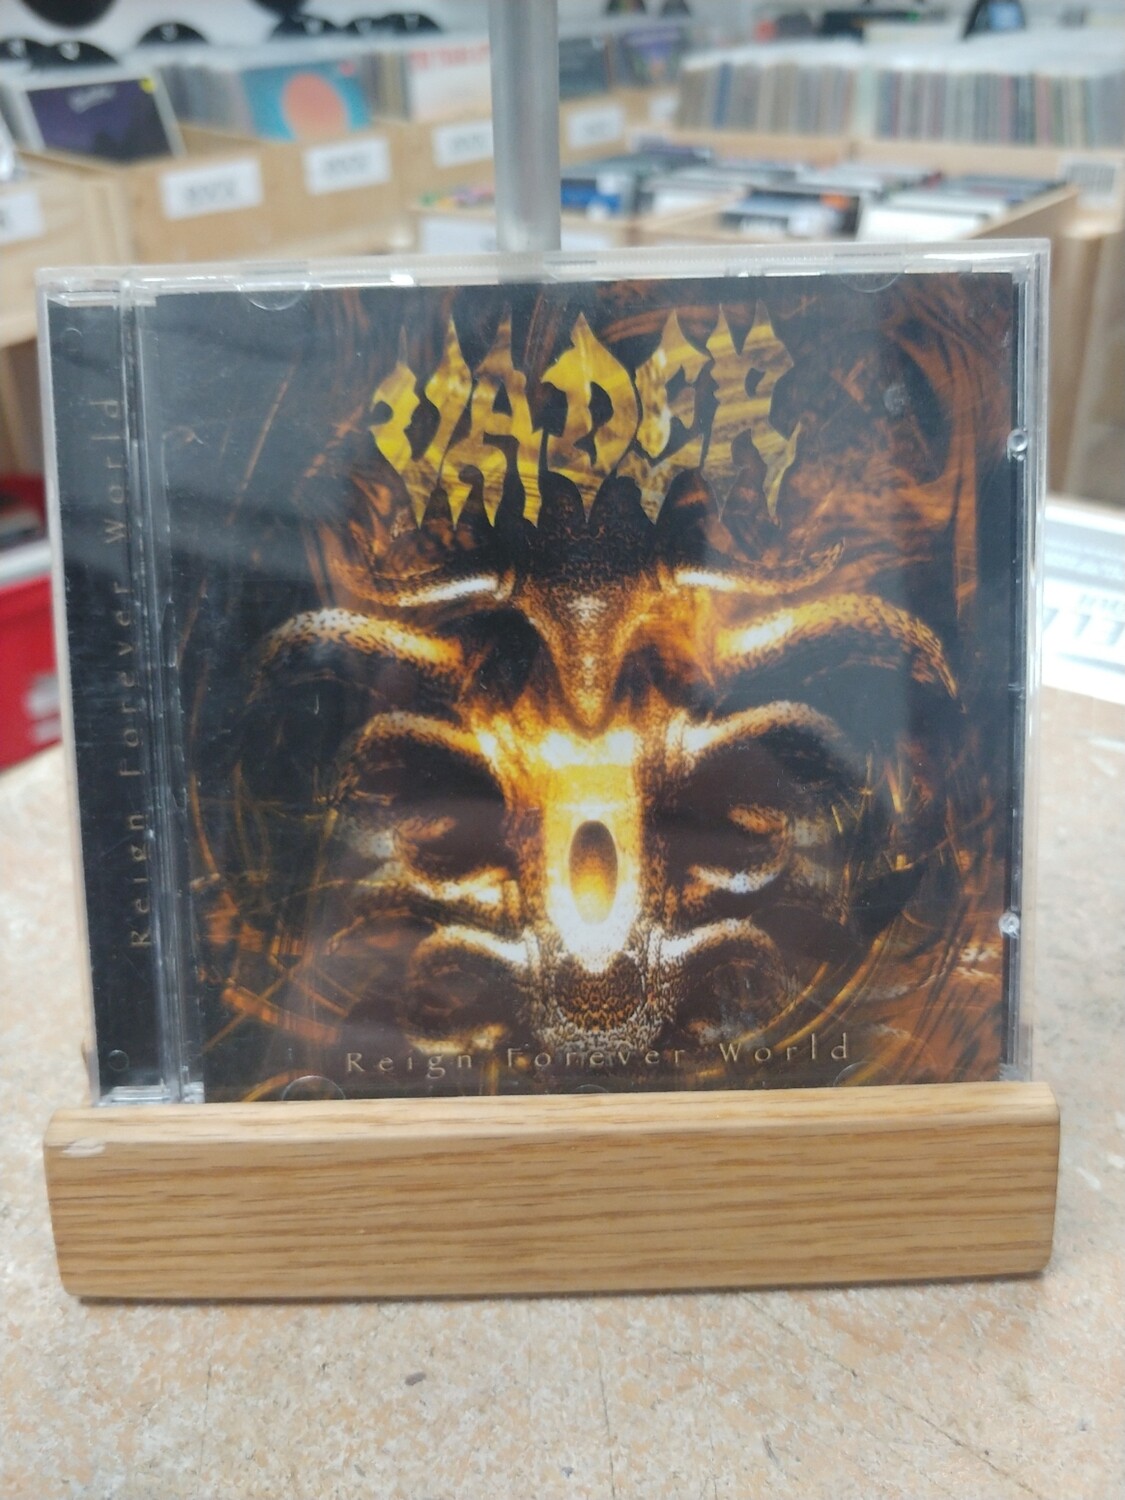 Vader - Reign forever world (CD)